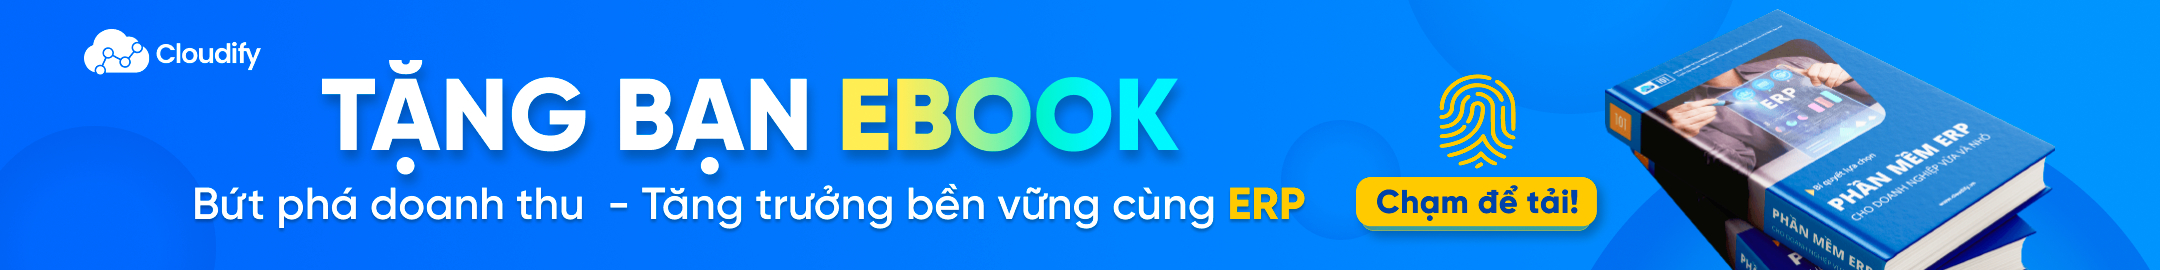 Cloudify Banner Ebook